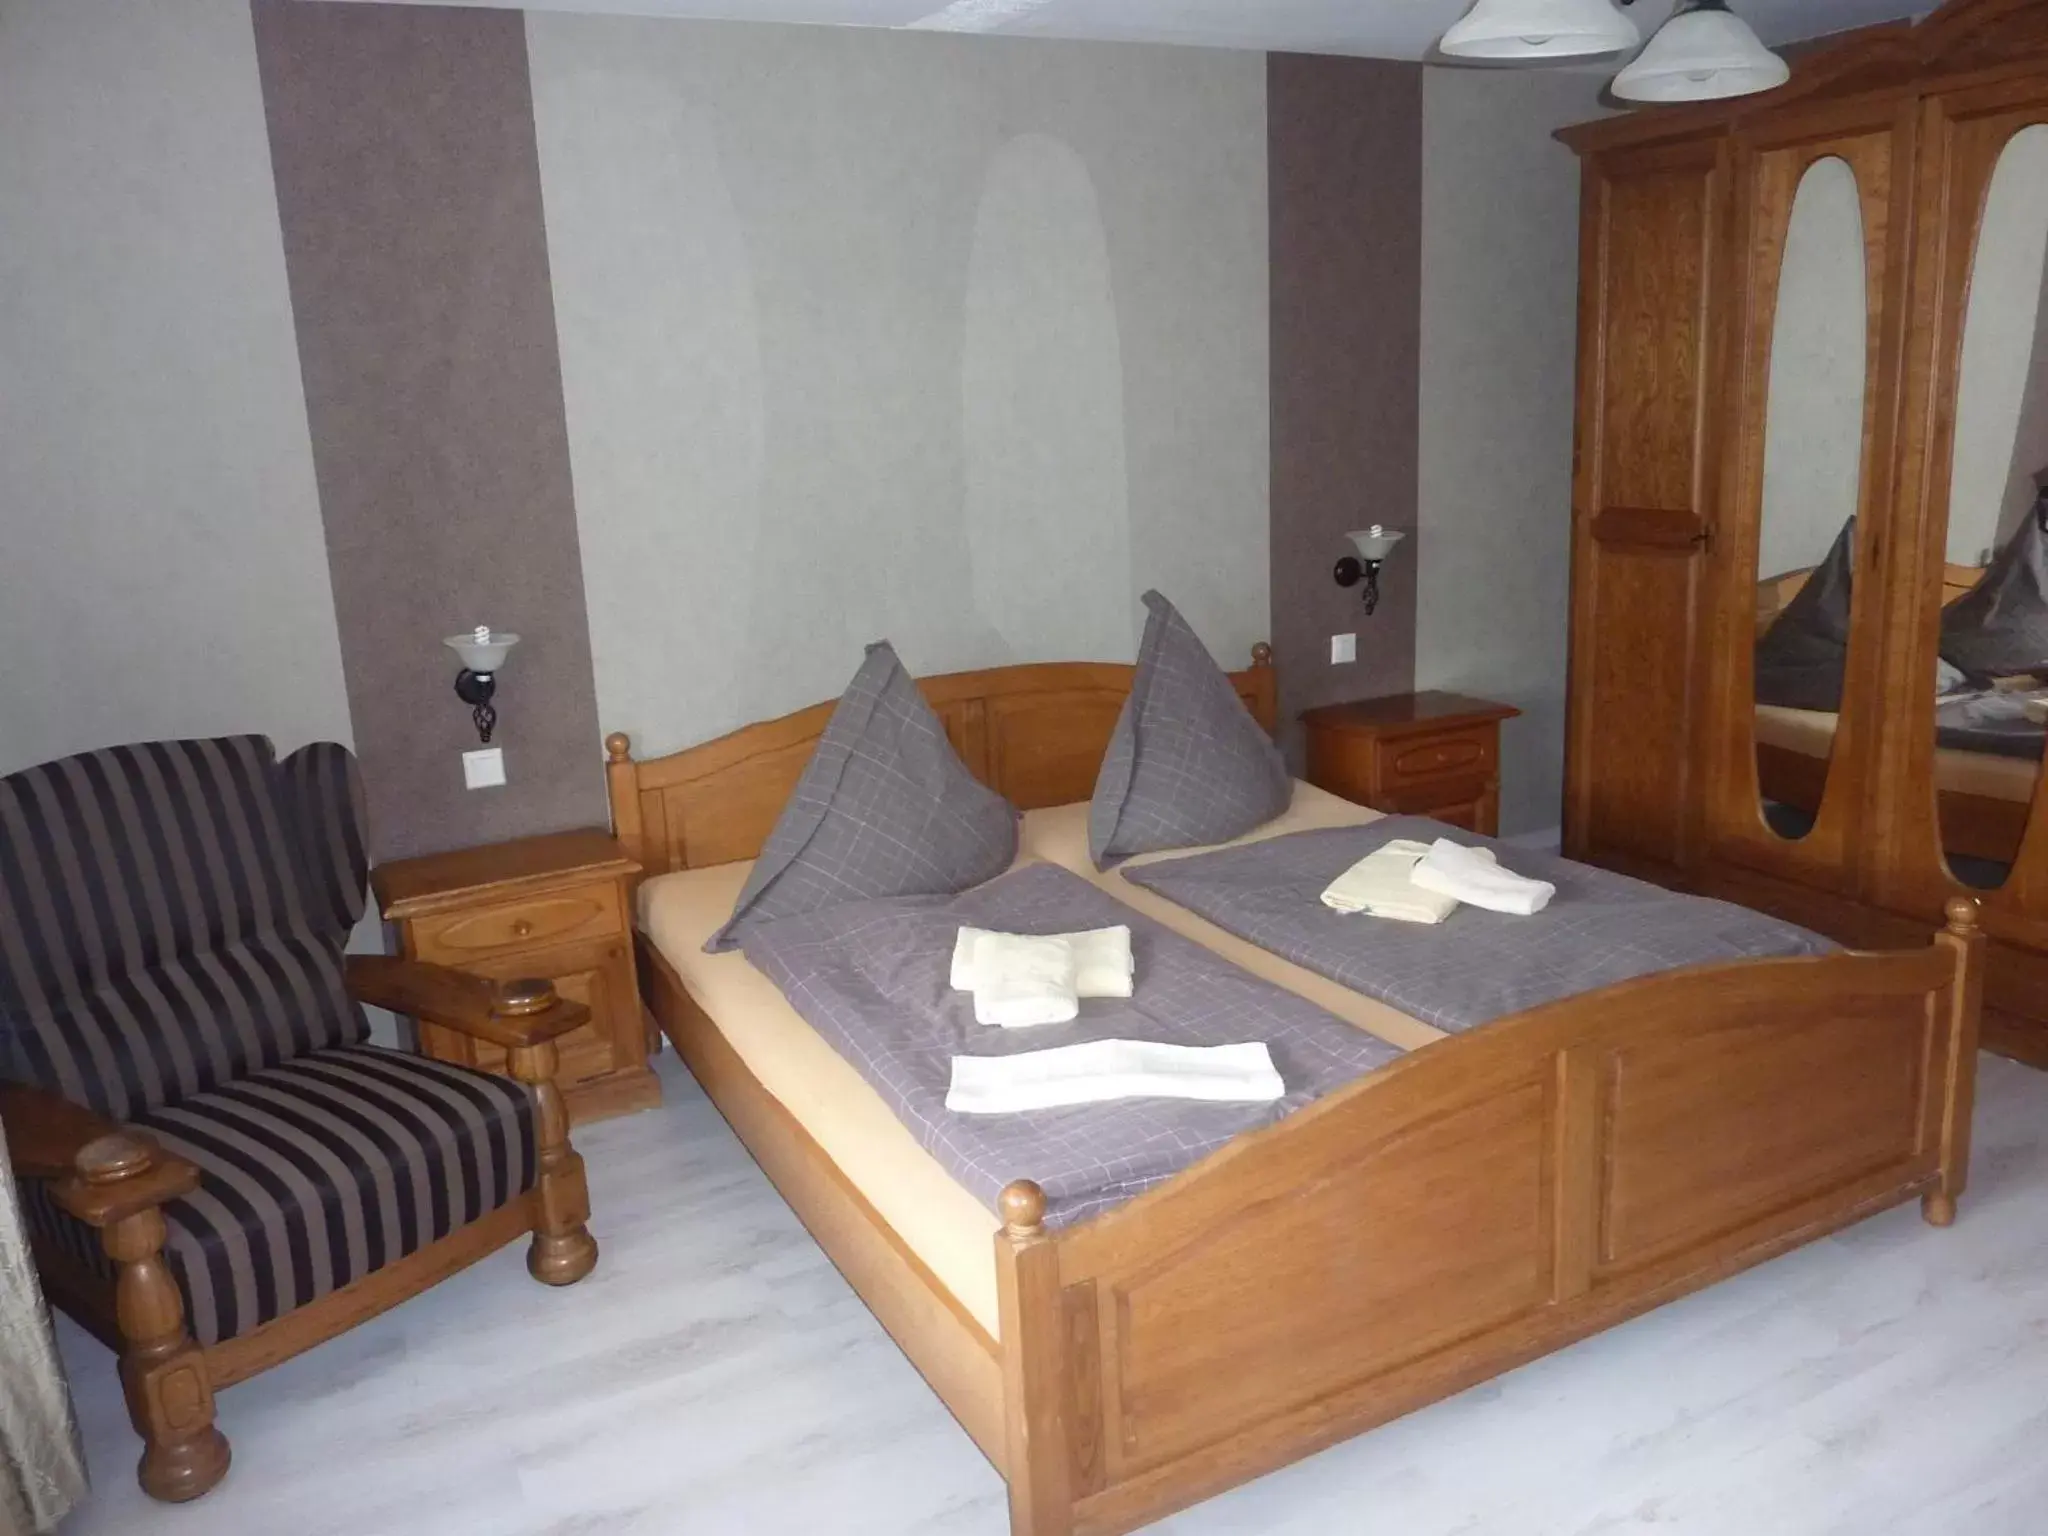 Bed, Room Photo in Hotel Wernerwald